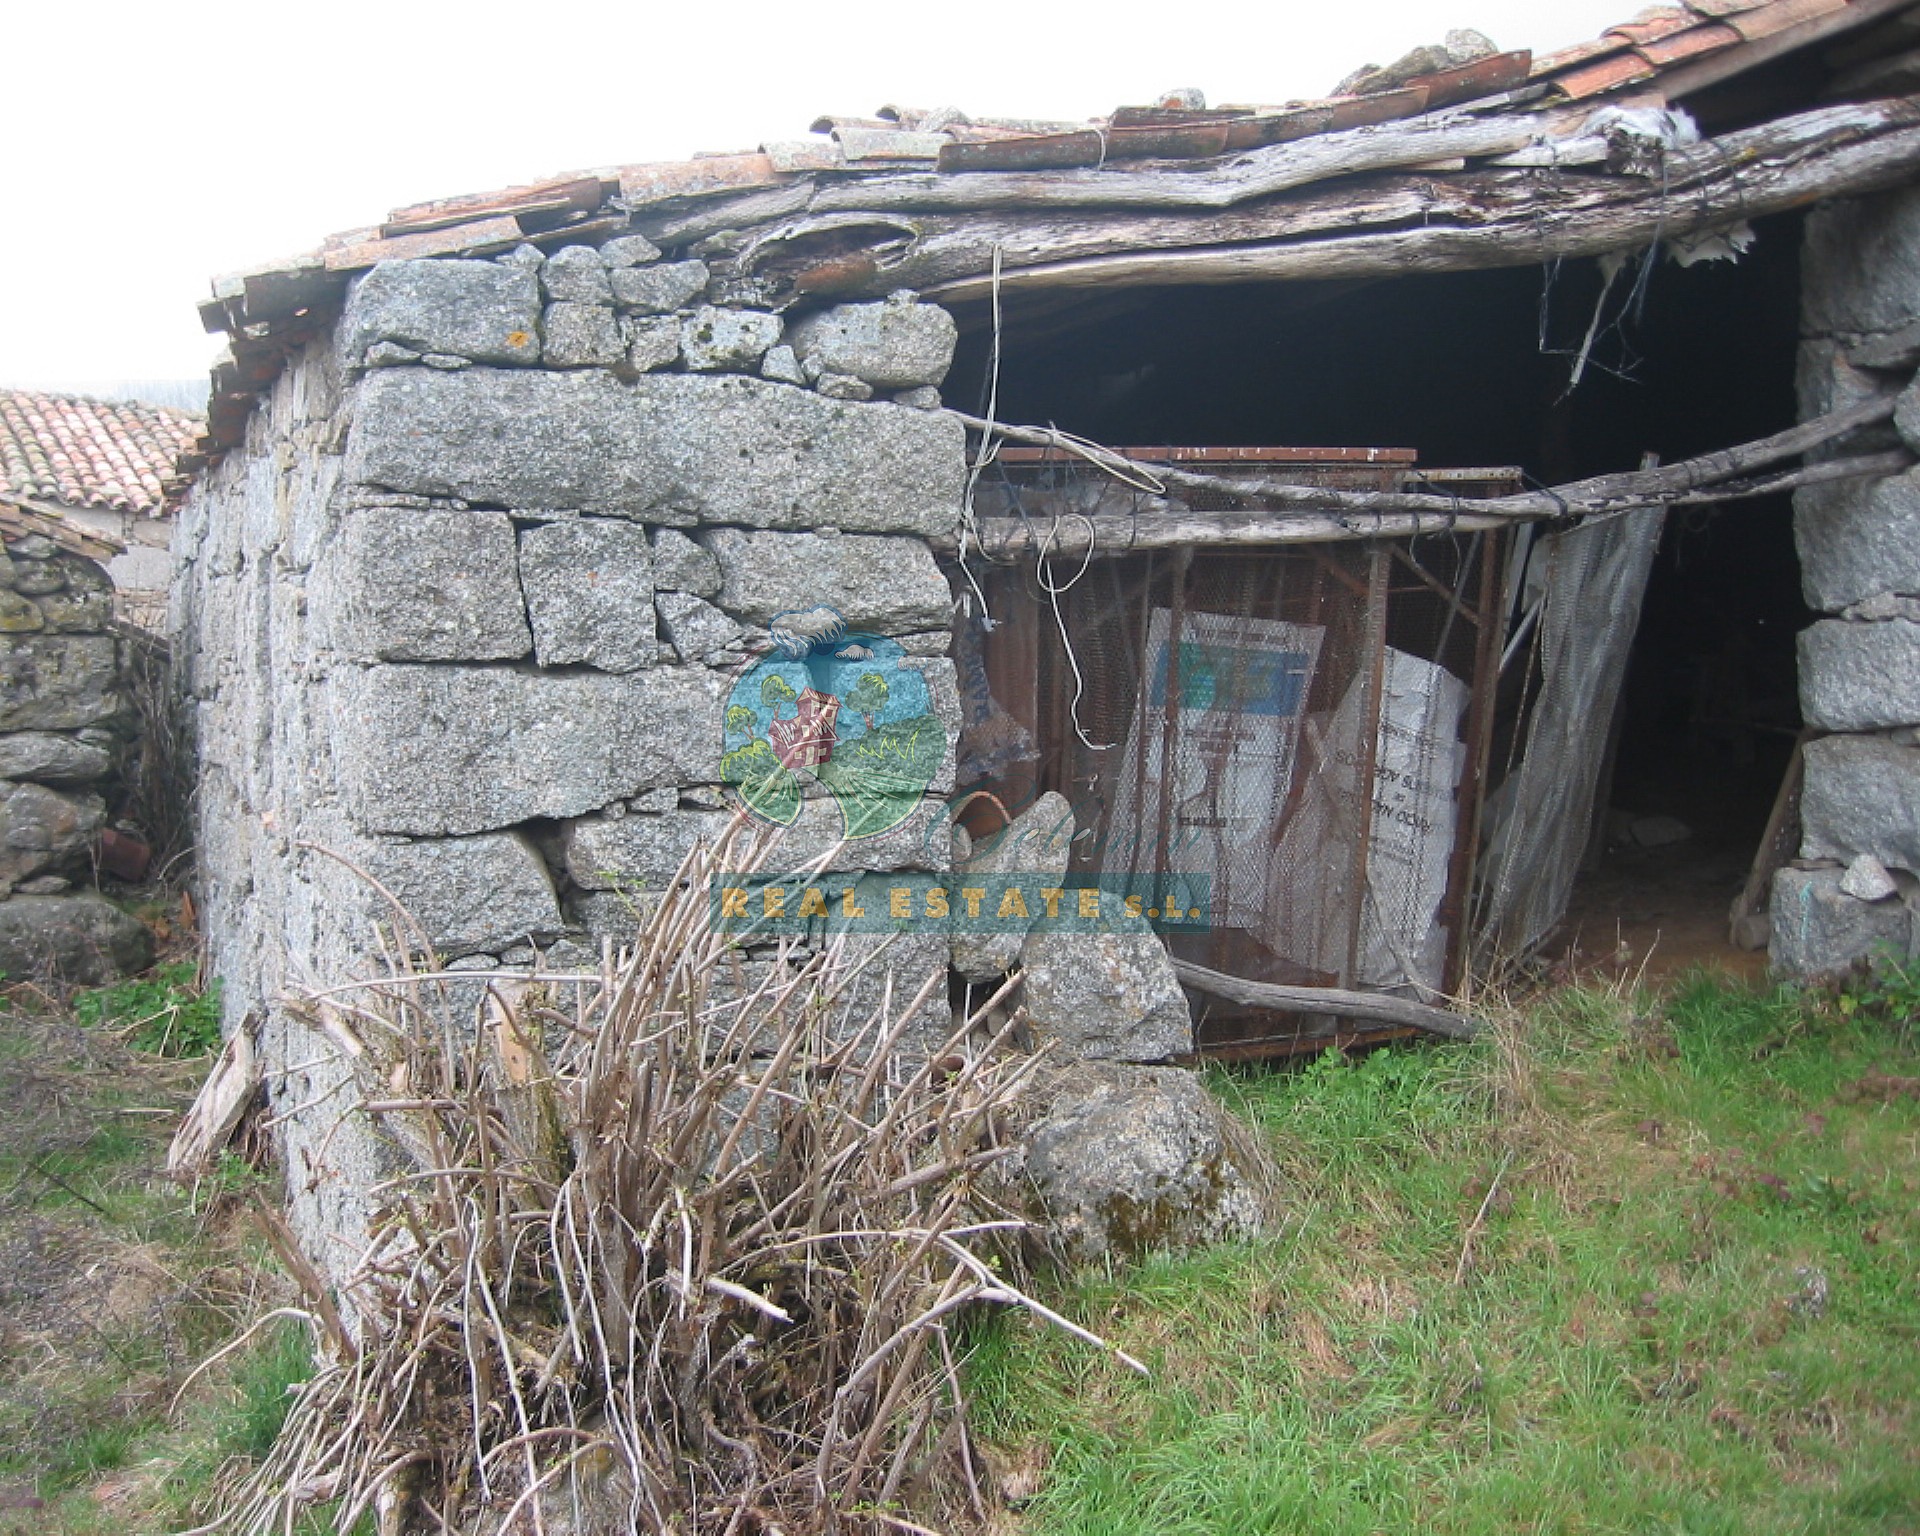 Property for rehabilitation in Sierra de Gredos